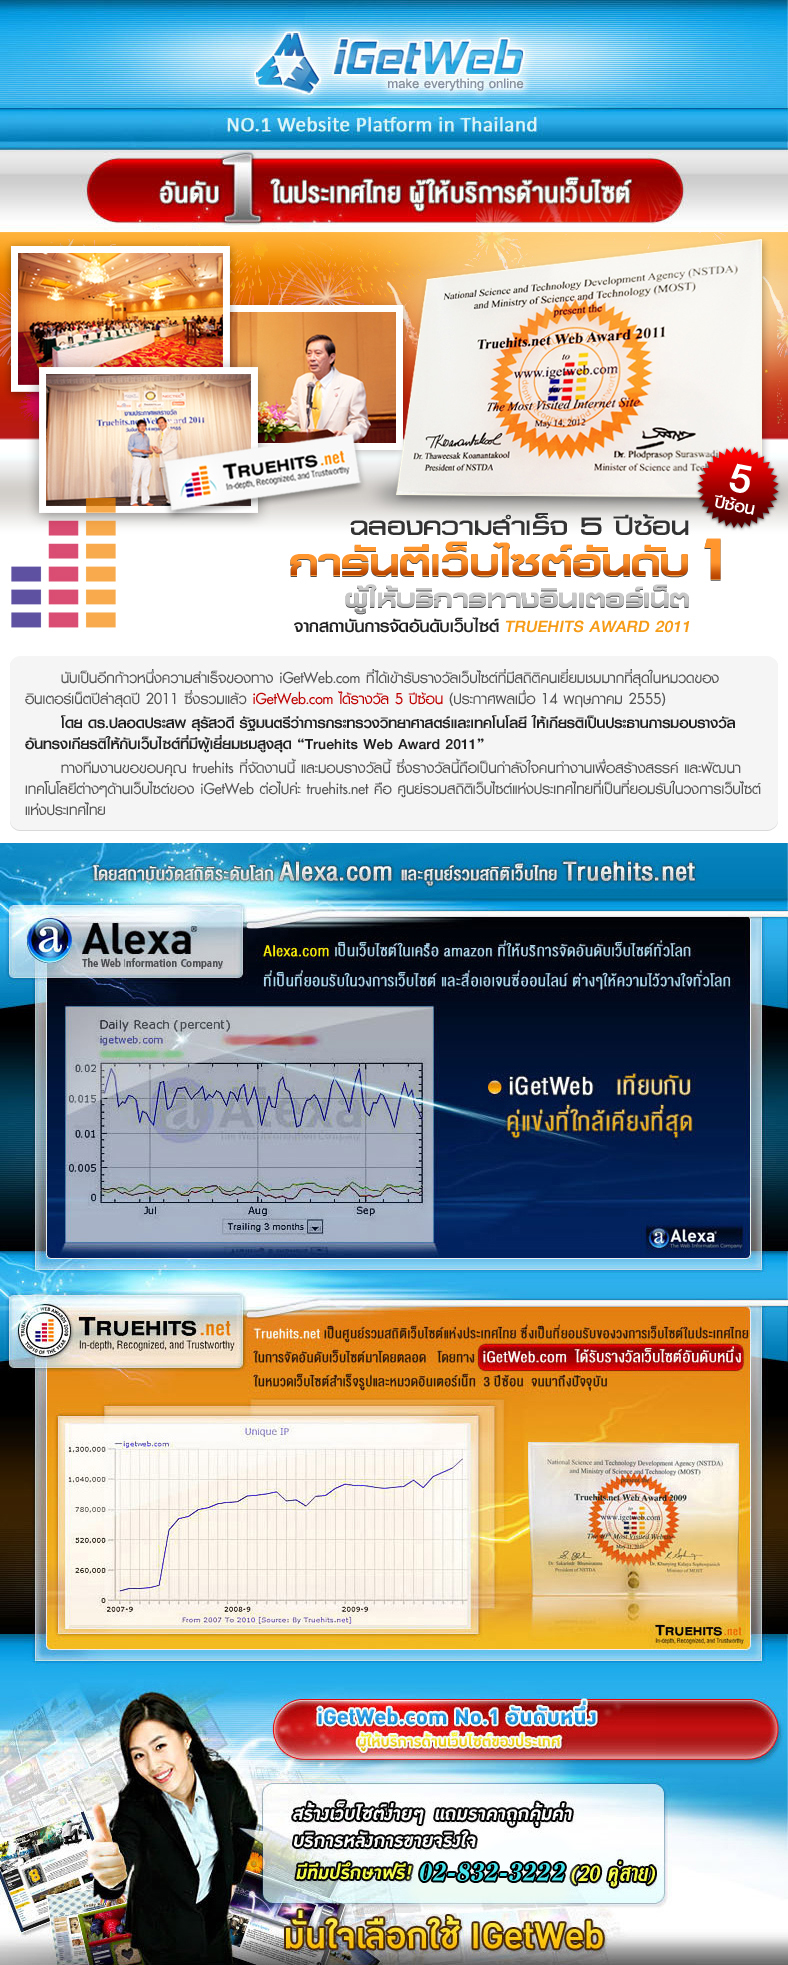 Number 1 website platform in Thailand